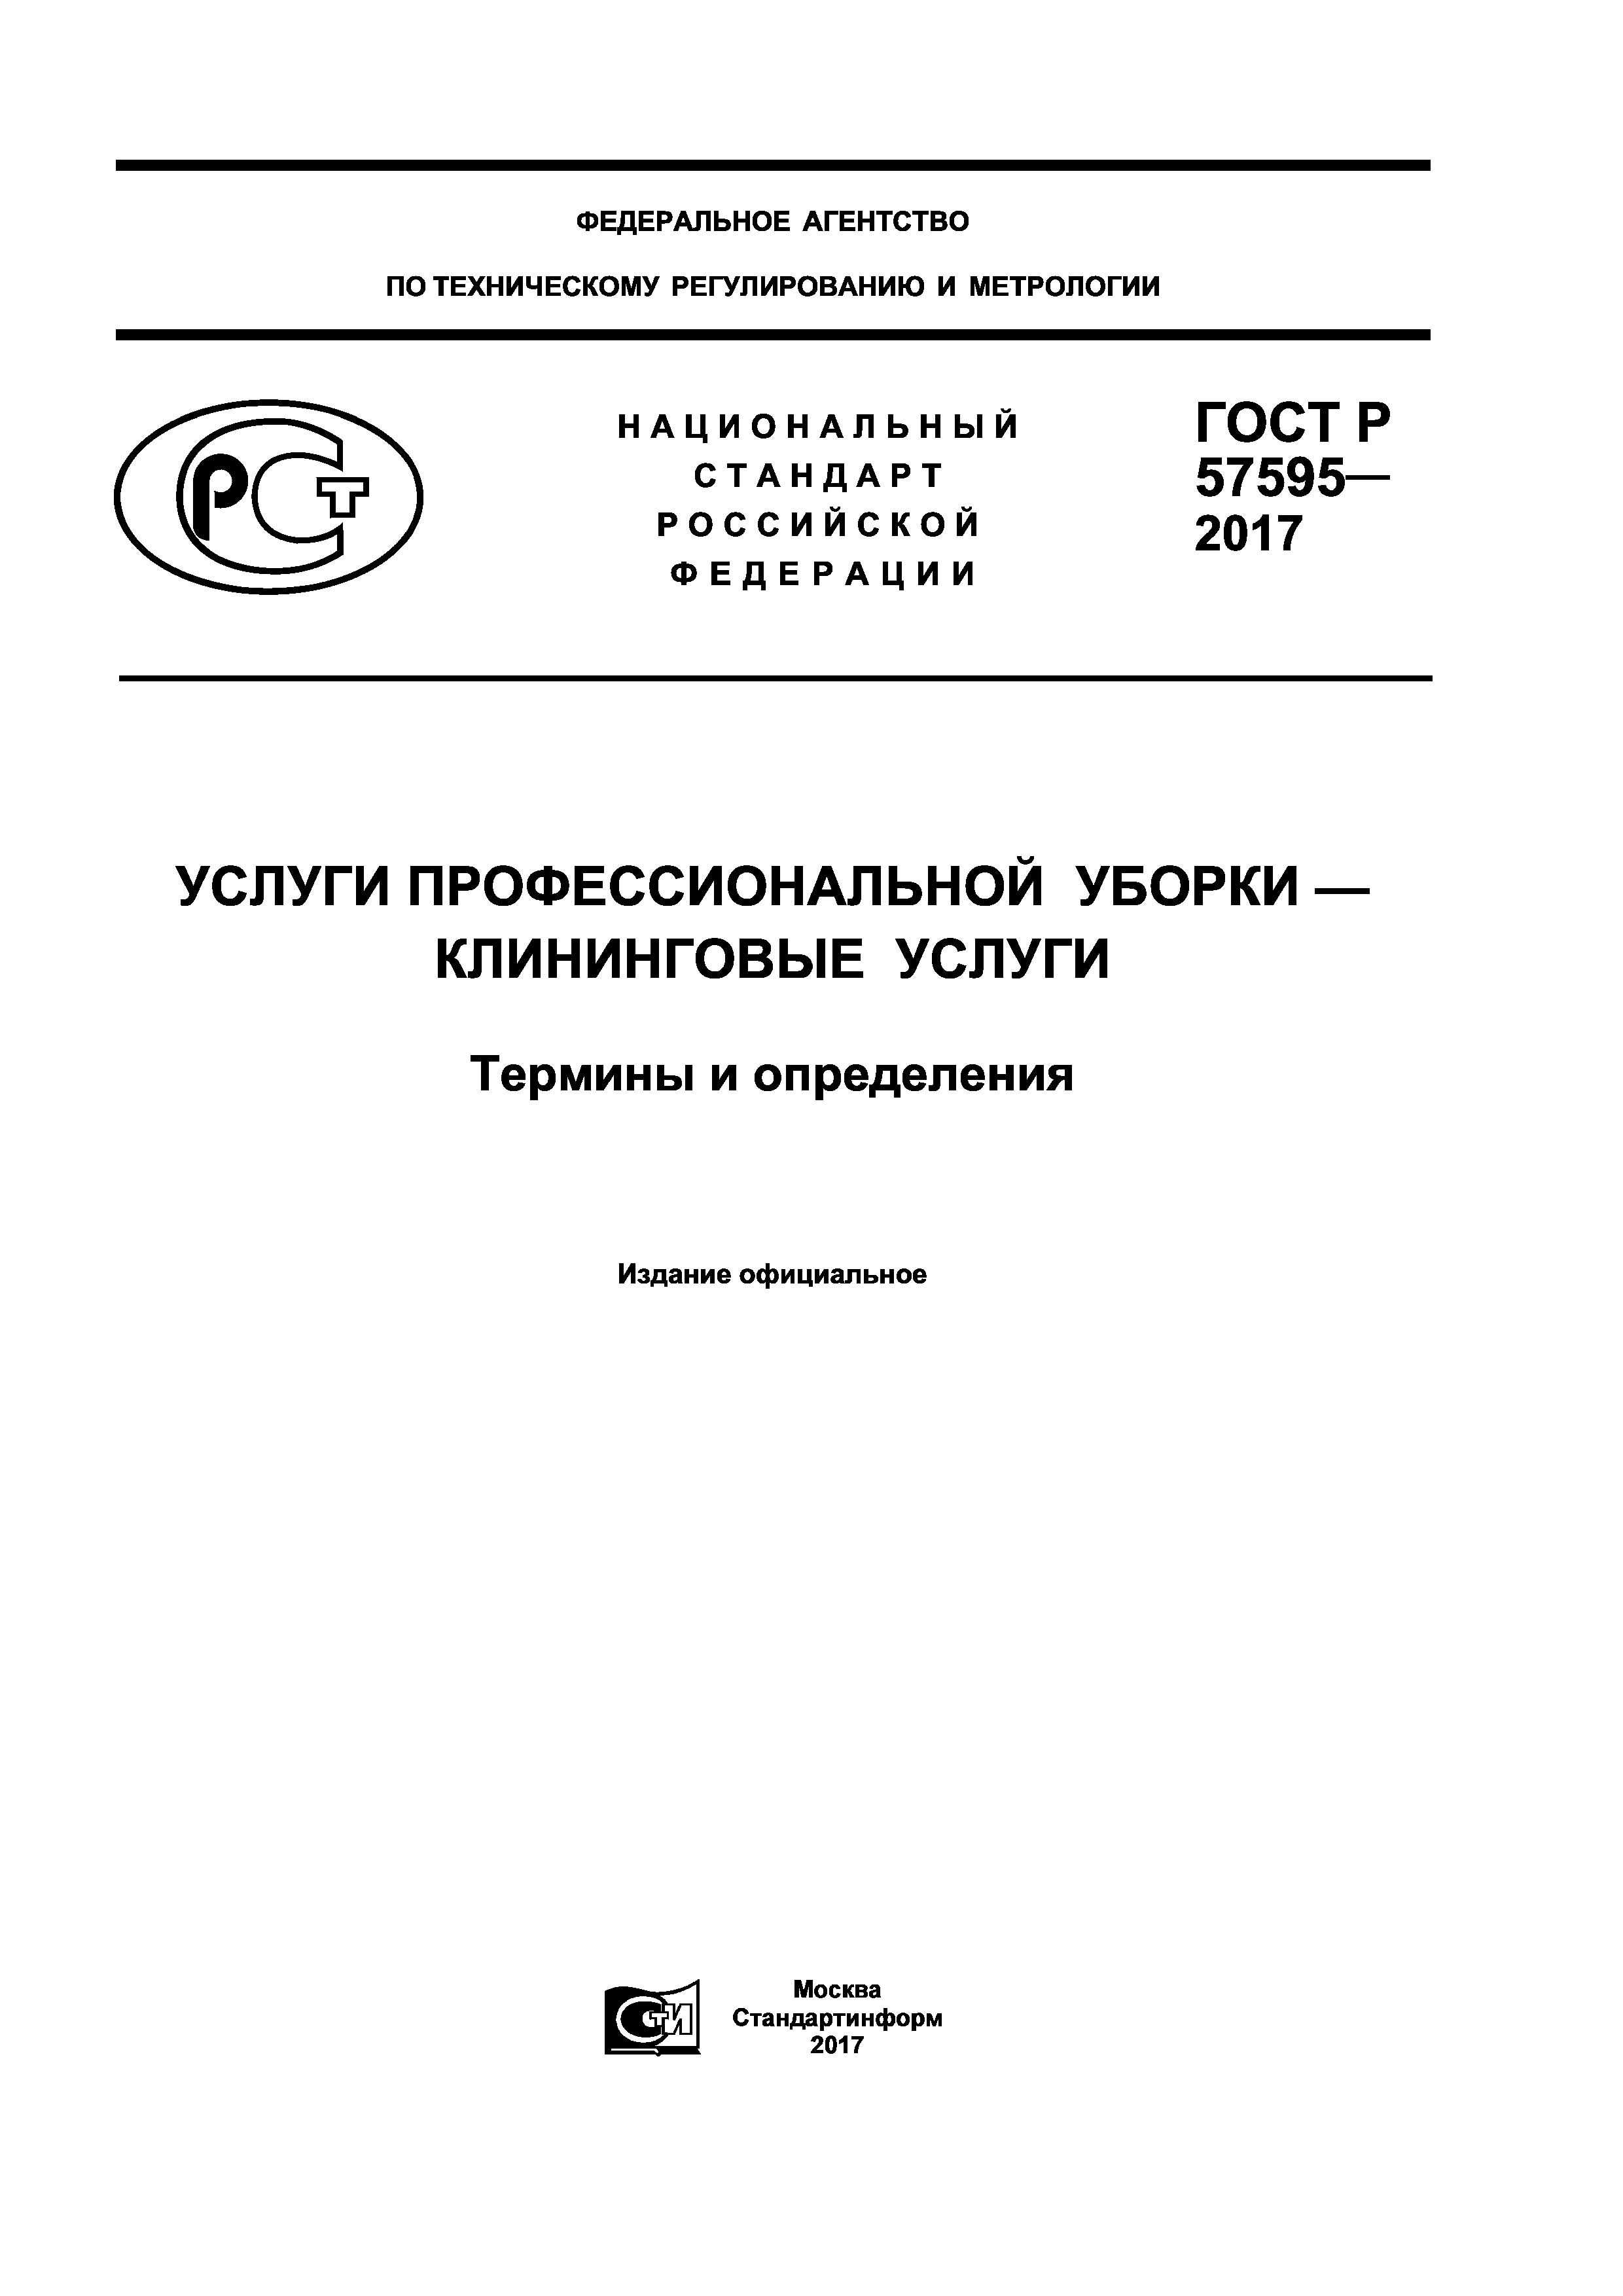 ГОСТ Р 57595-2017